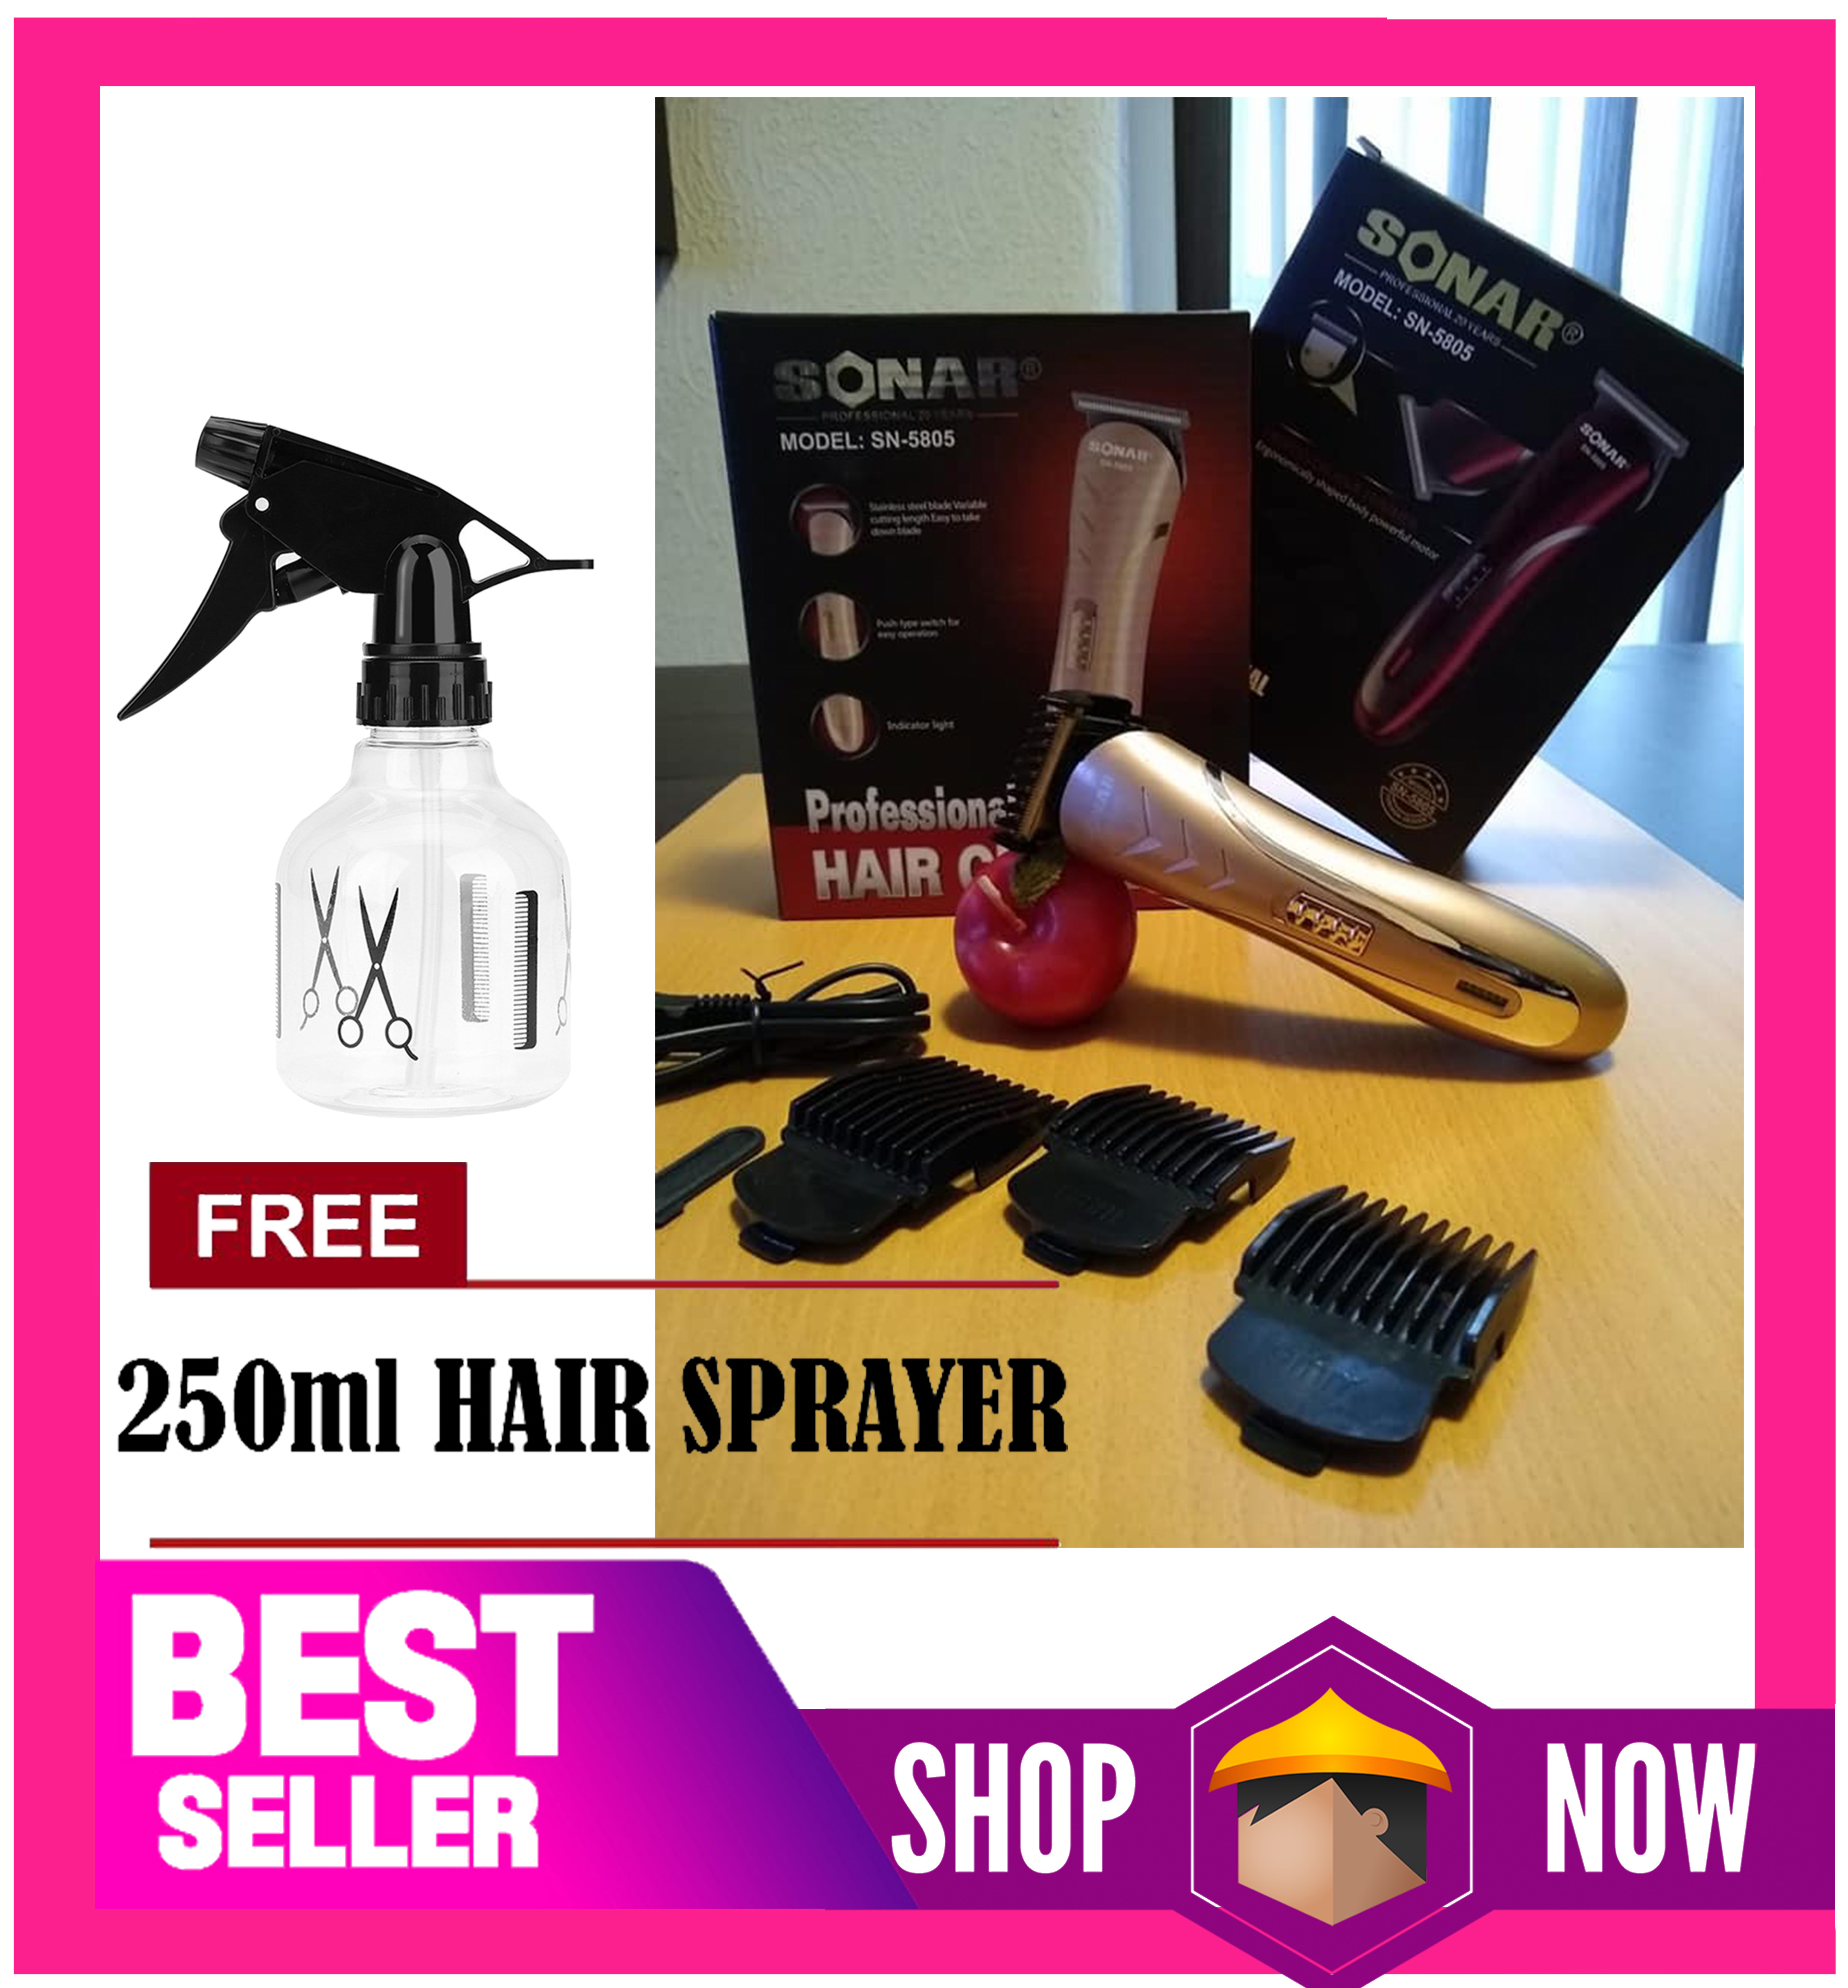 sonar professional hair clippers sn 5802